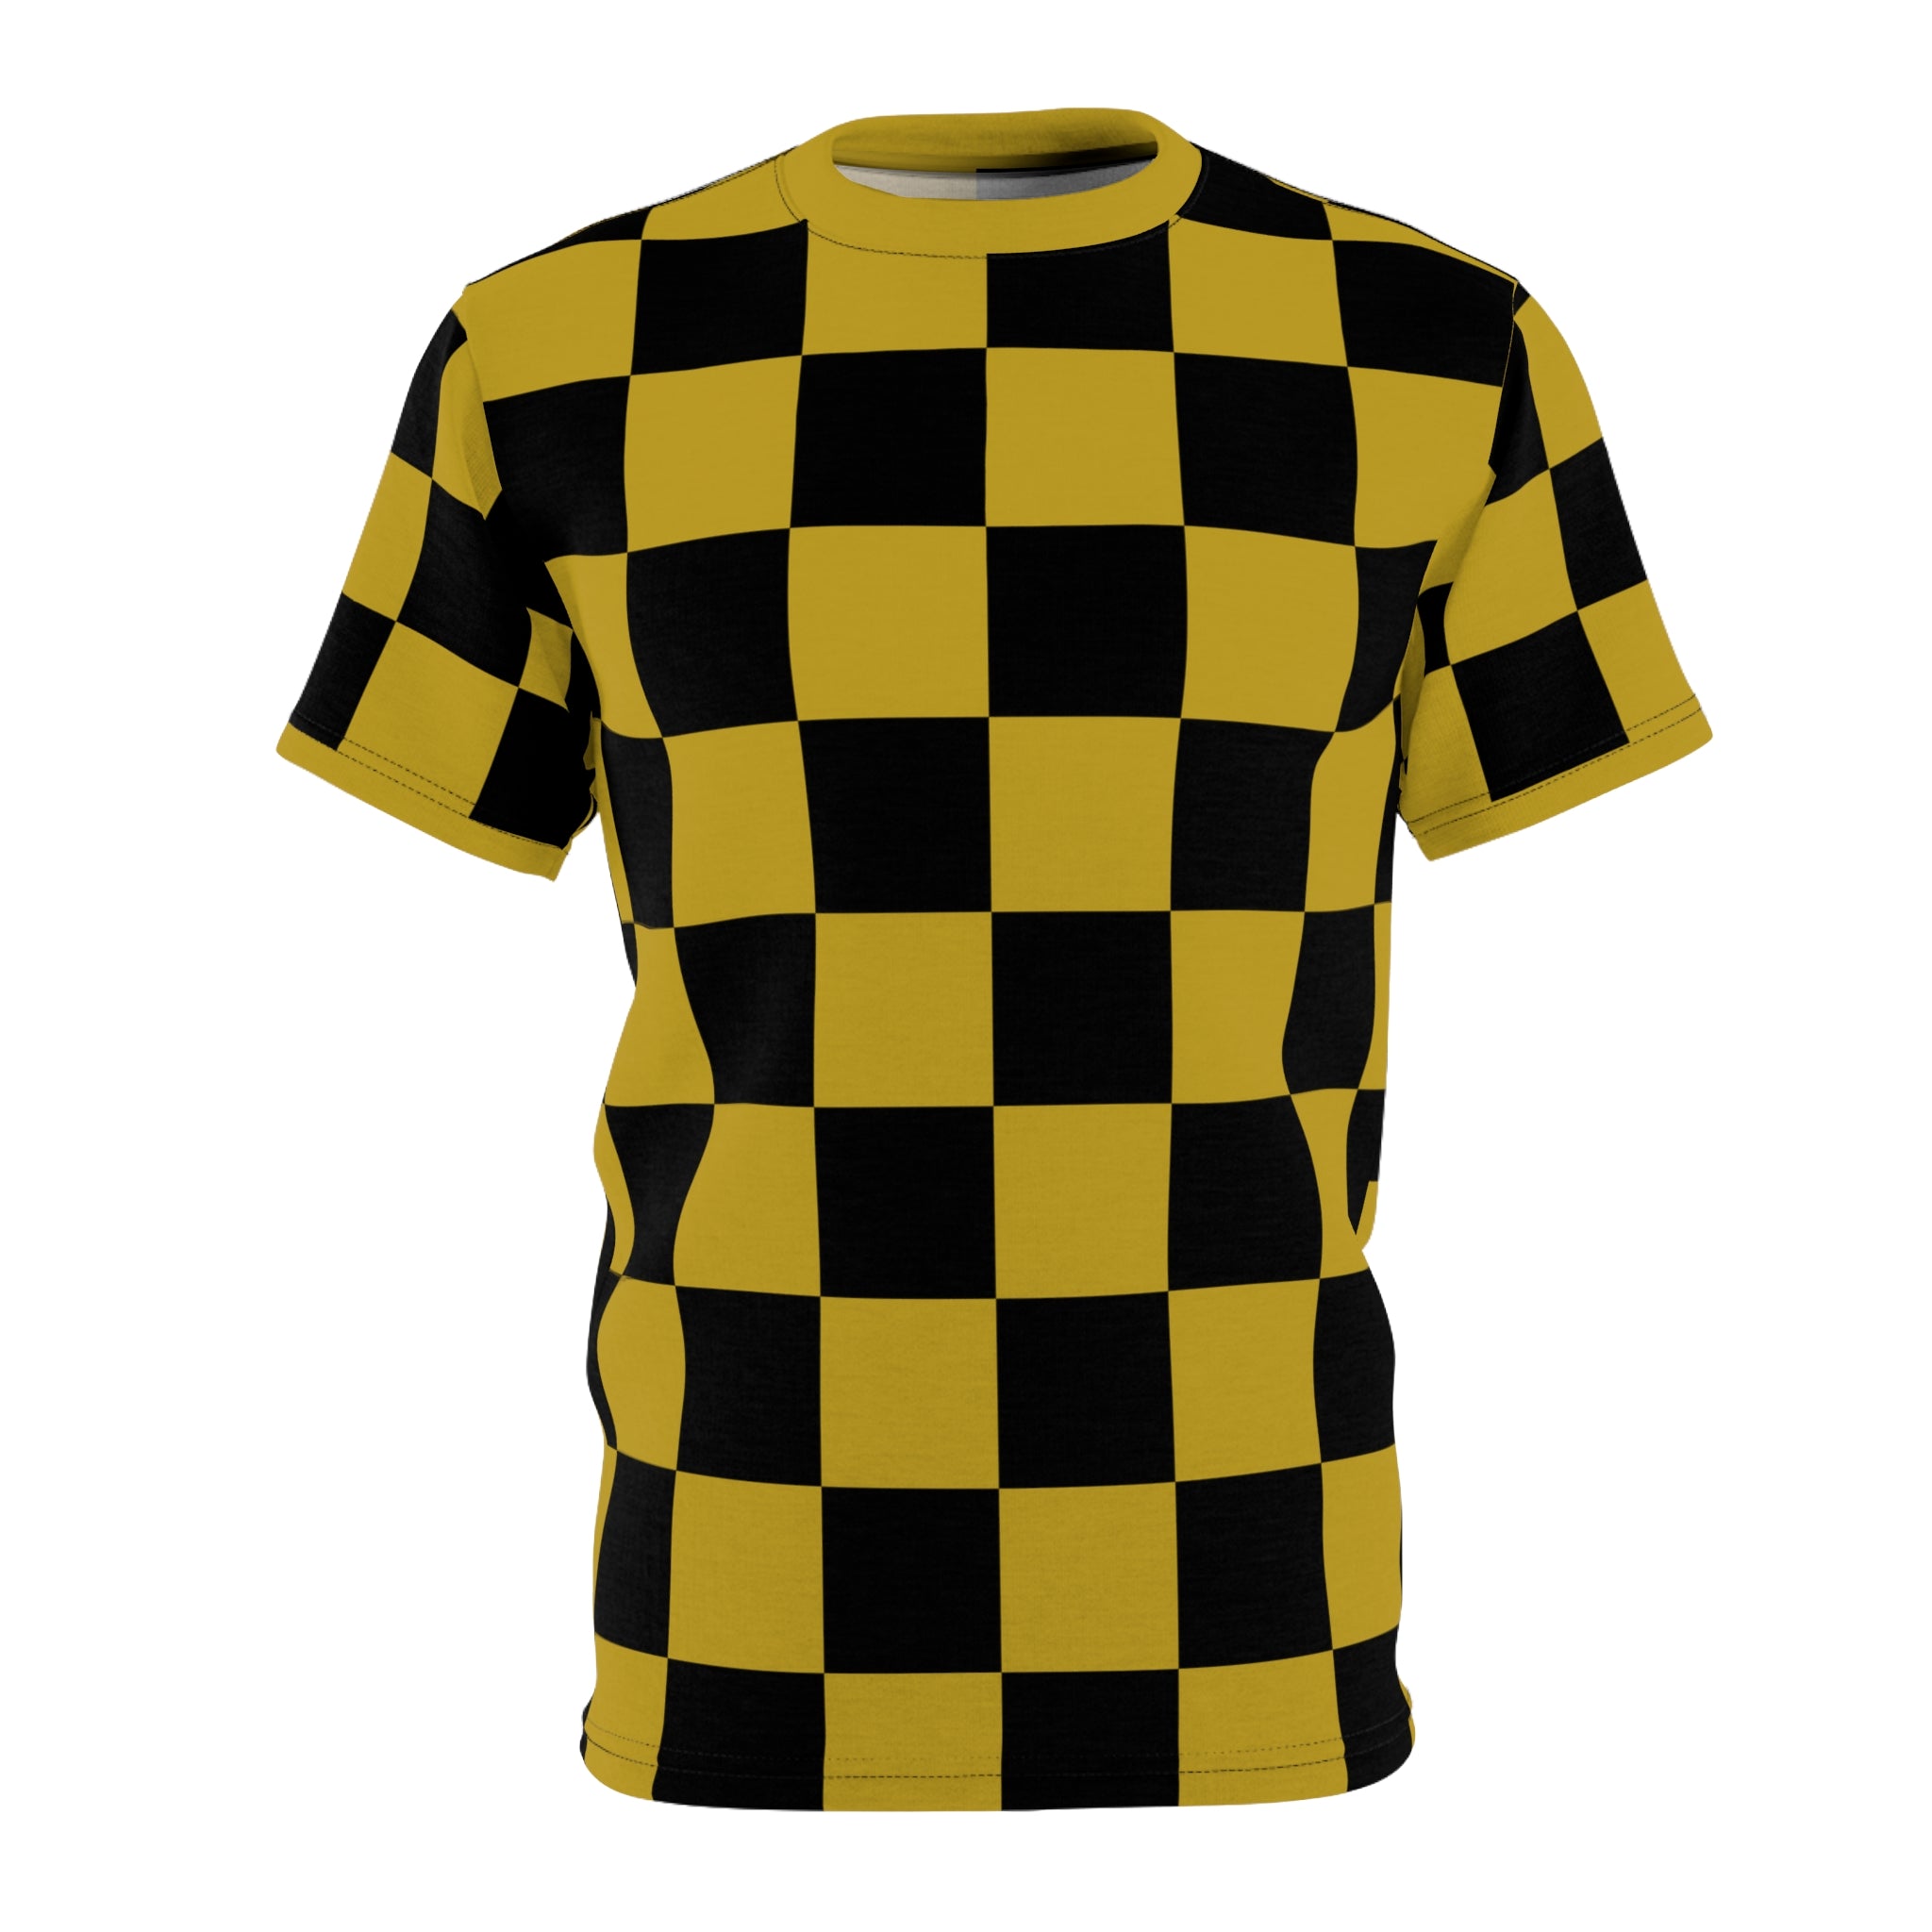 Black & Gold Checkerboard Shirt